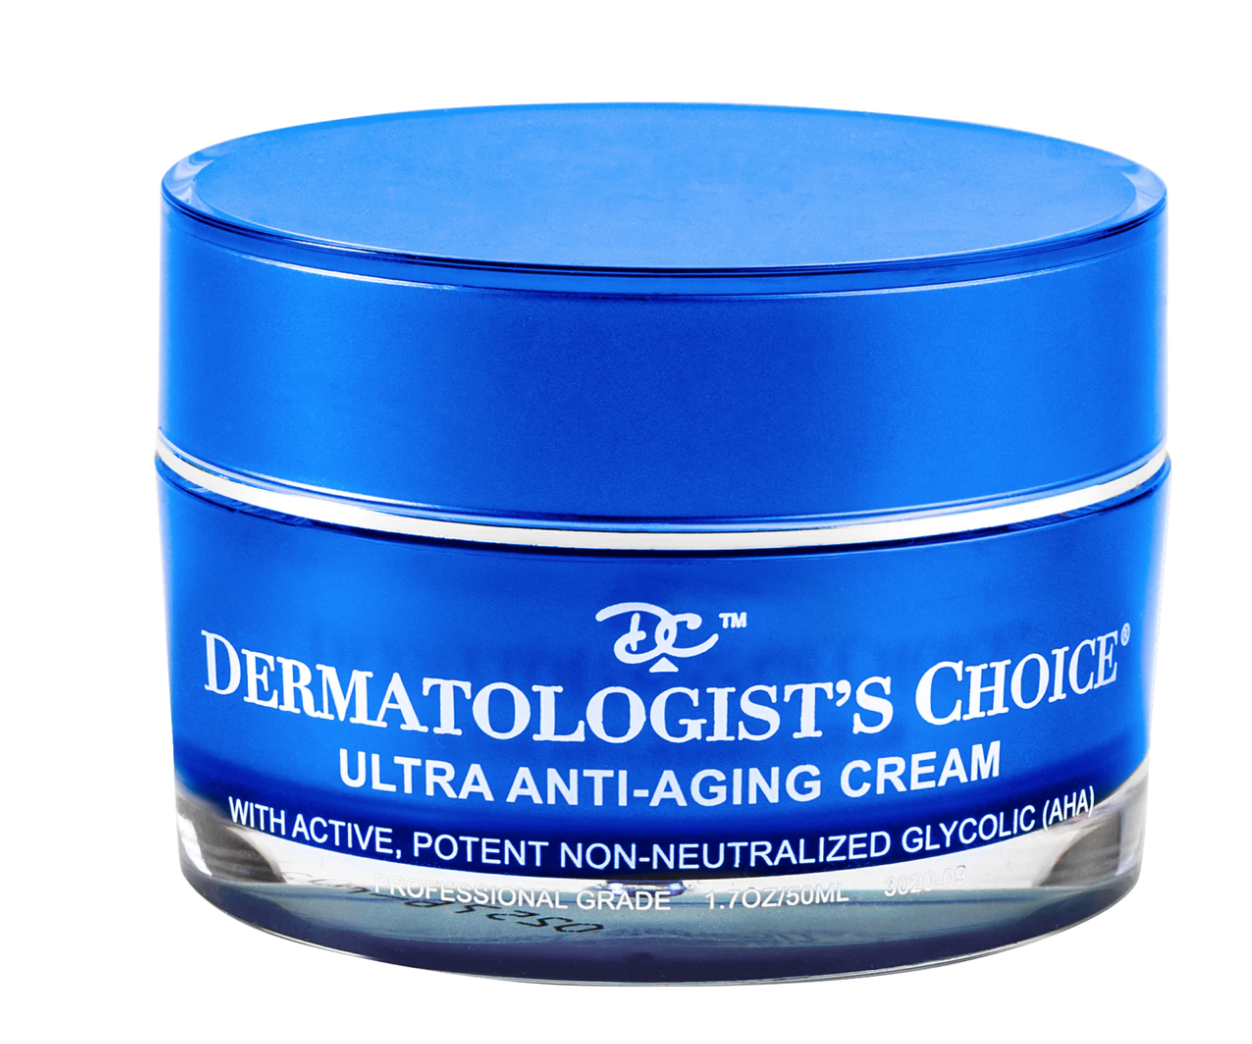 Dermatologist's Choice Ultra Anti-Aging Cream, powerful glycolic acid